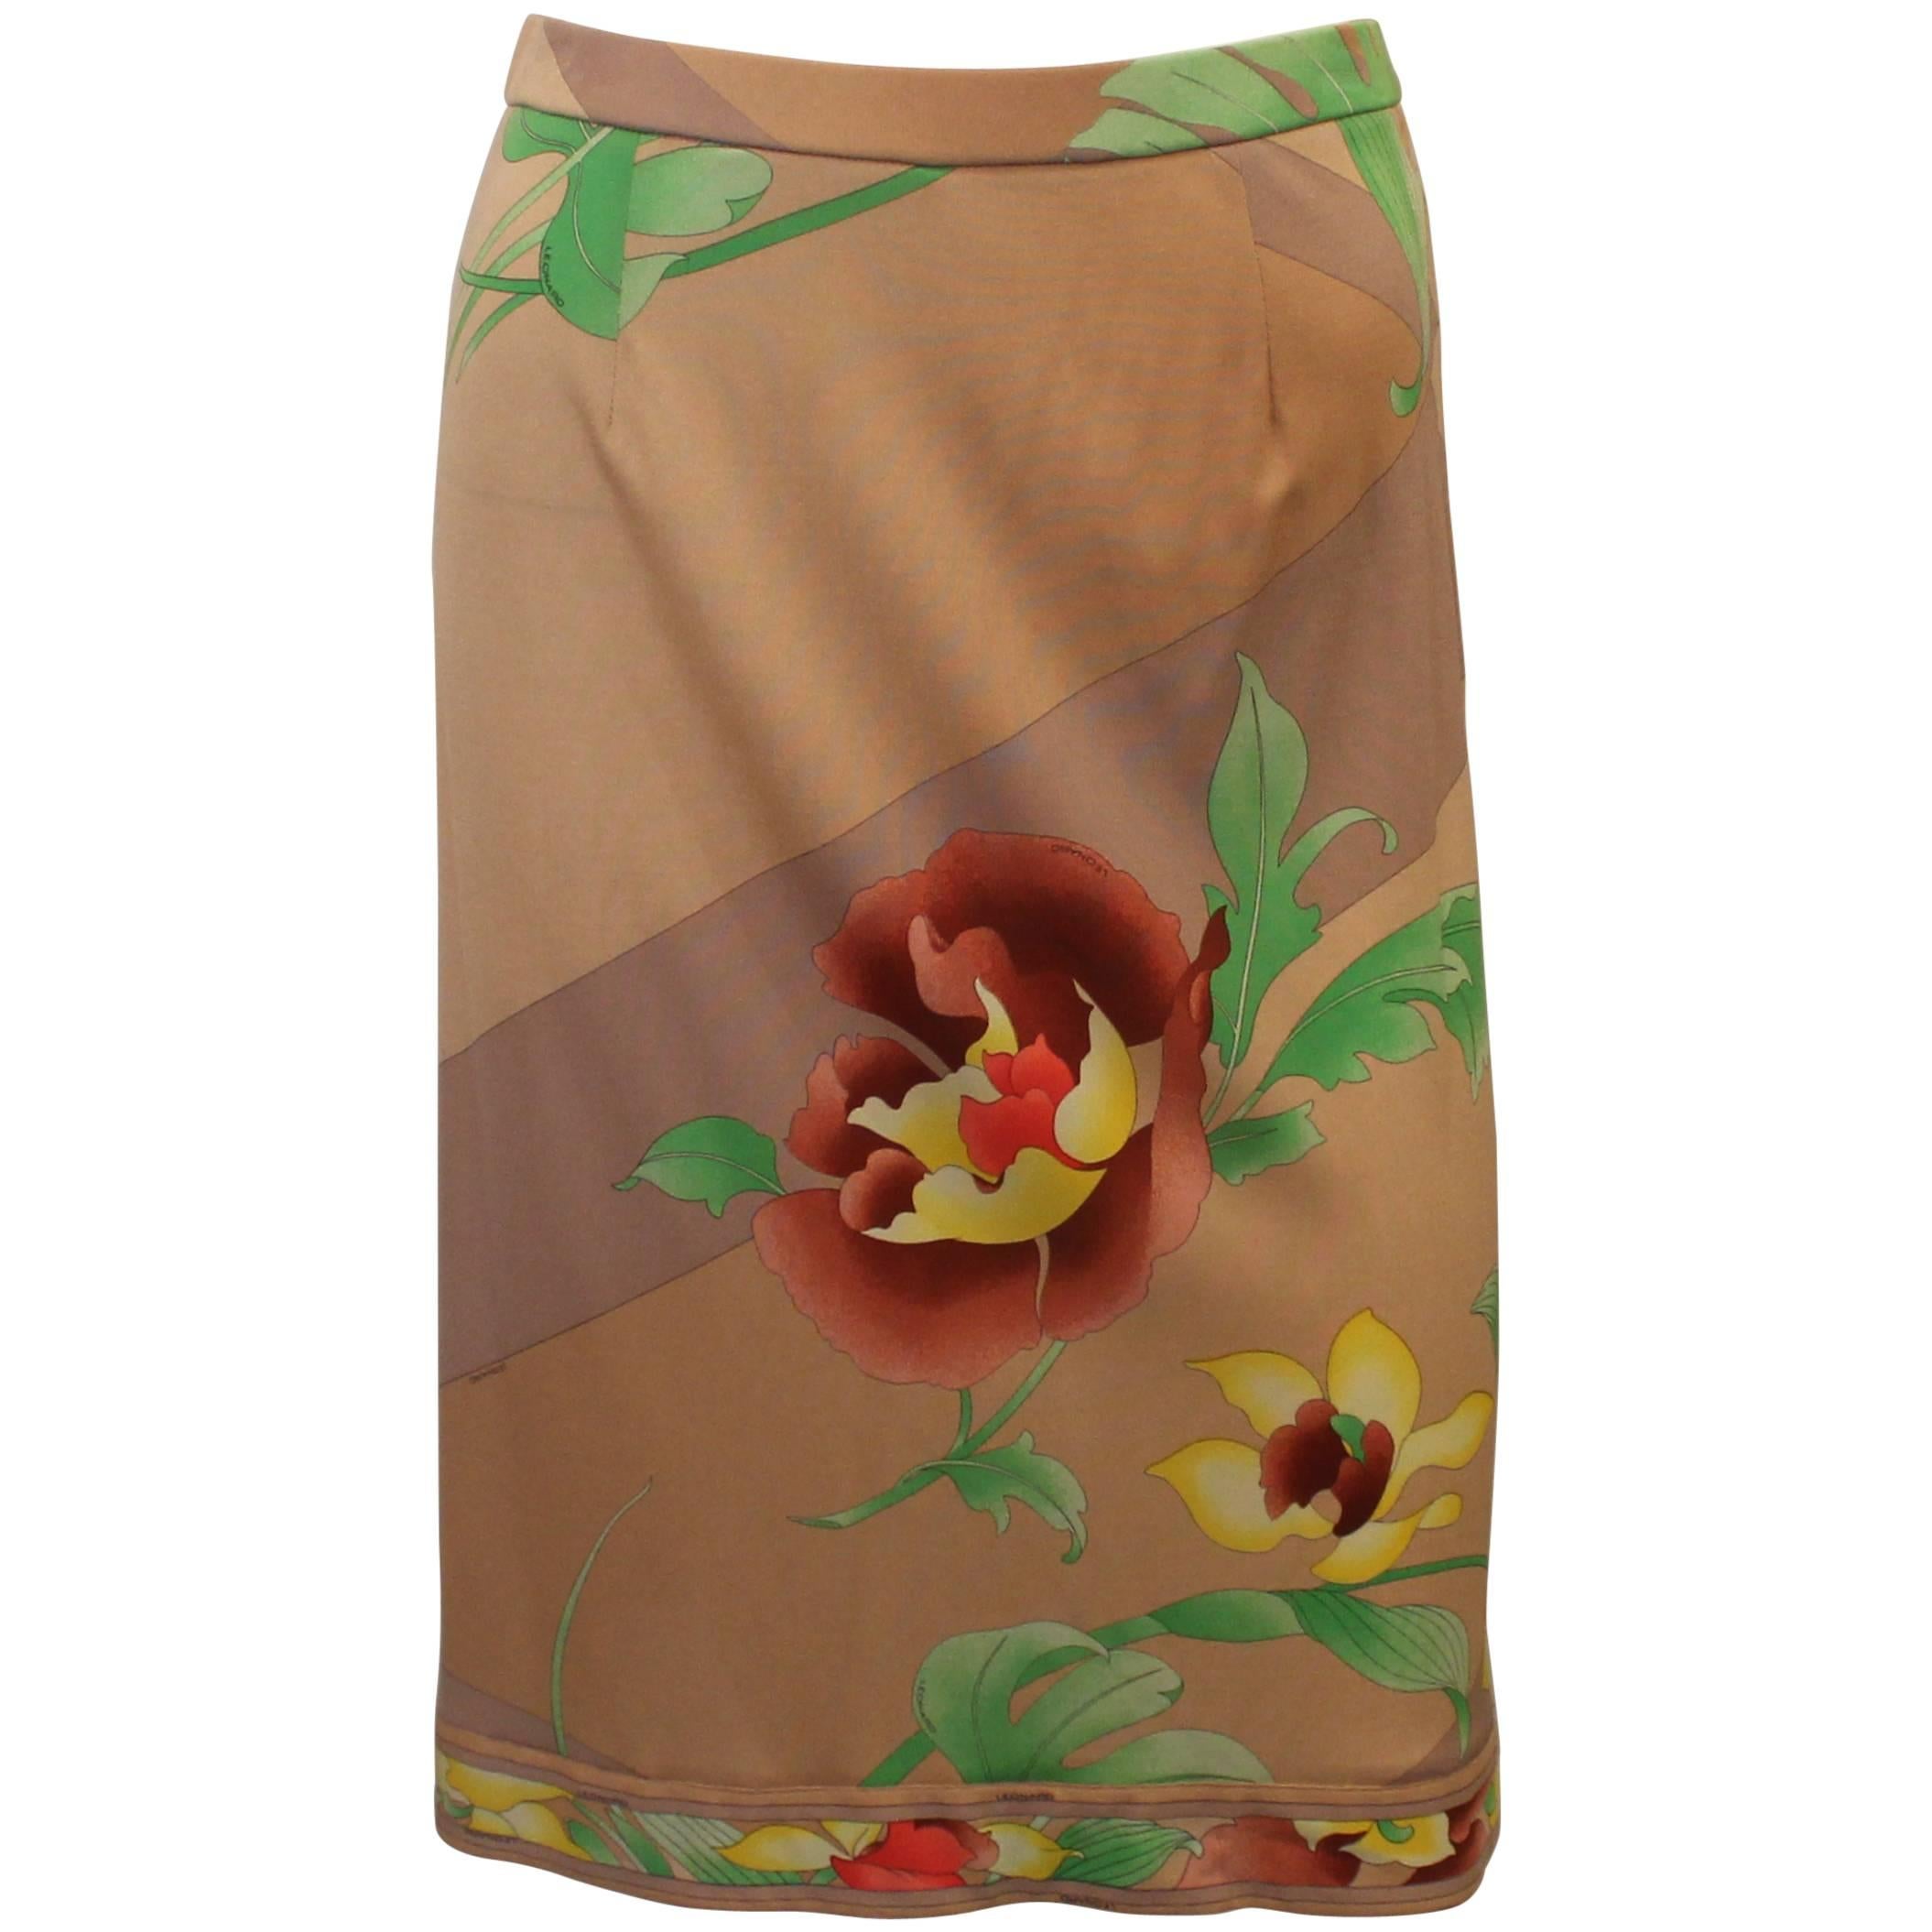 Leonard Tan Silk Jersey Skirt with Large Floral Print - 38 